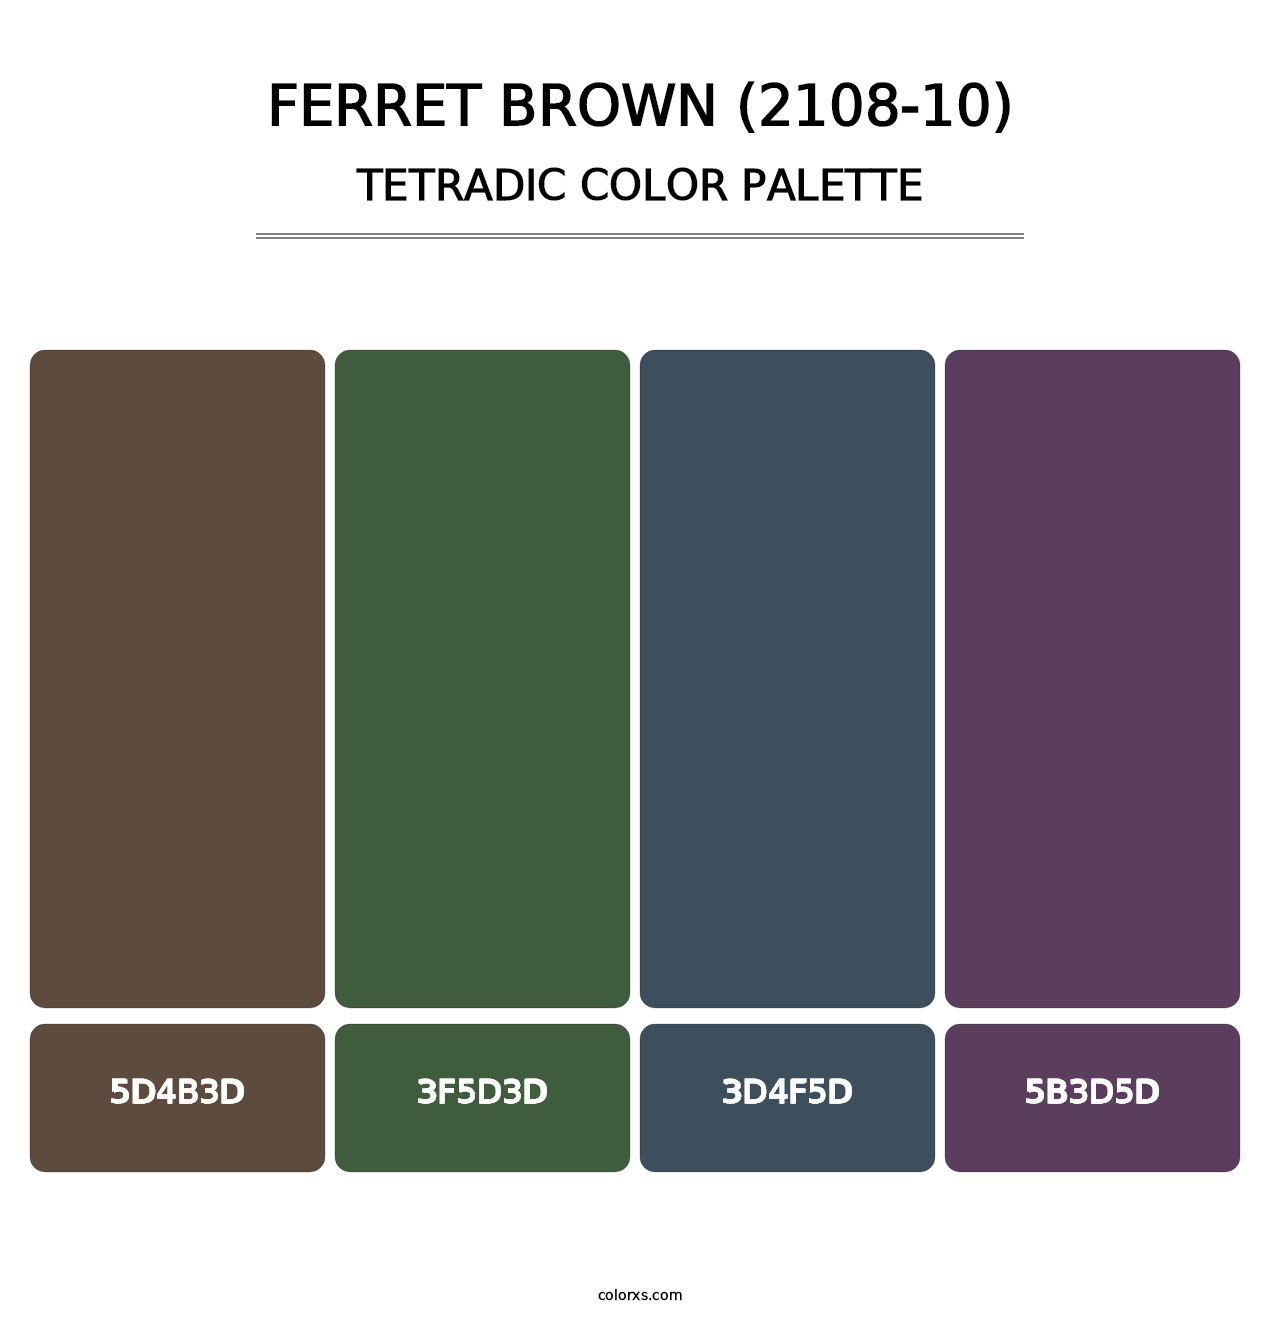 Ferret Brown (2108-10) - Tetradic Color Palette